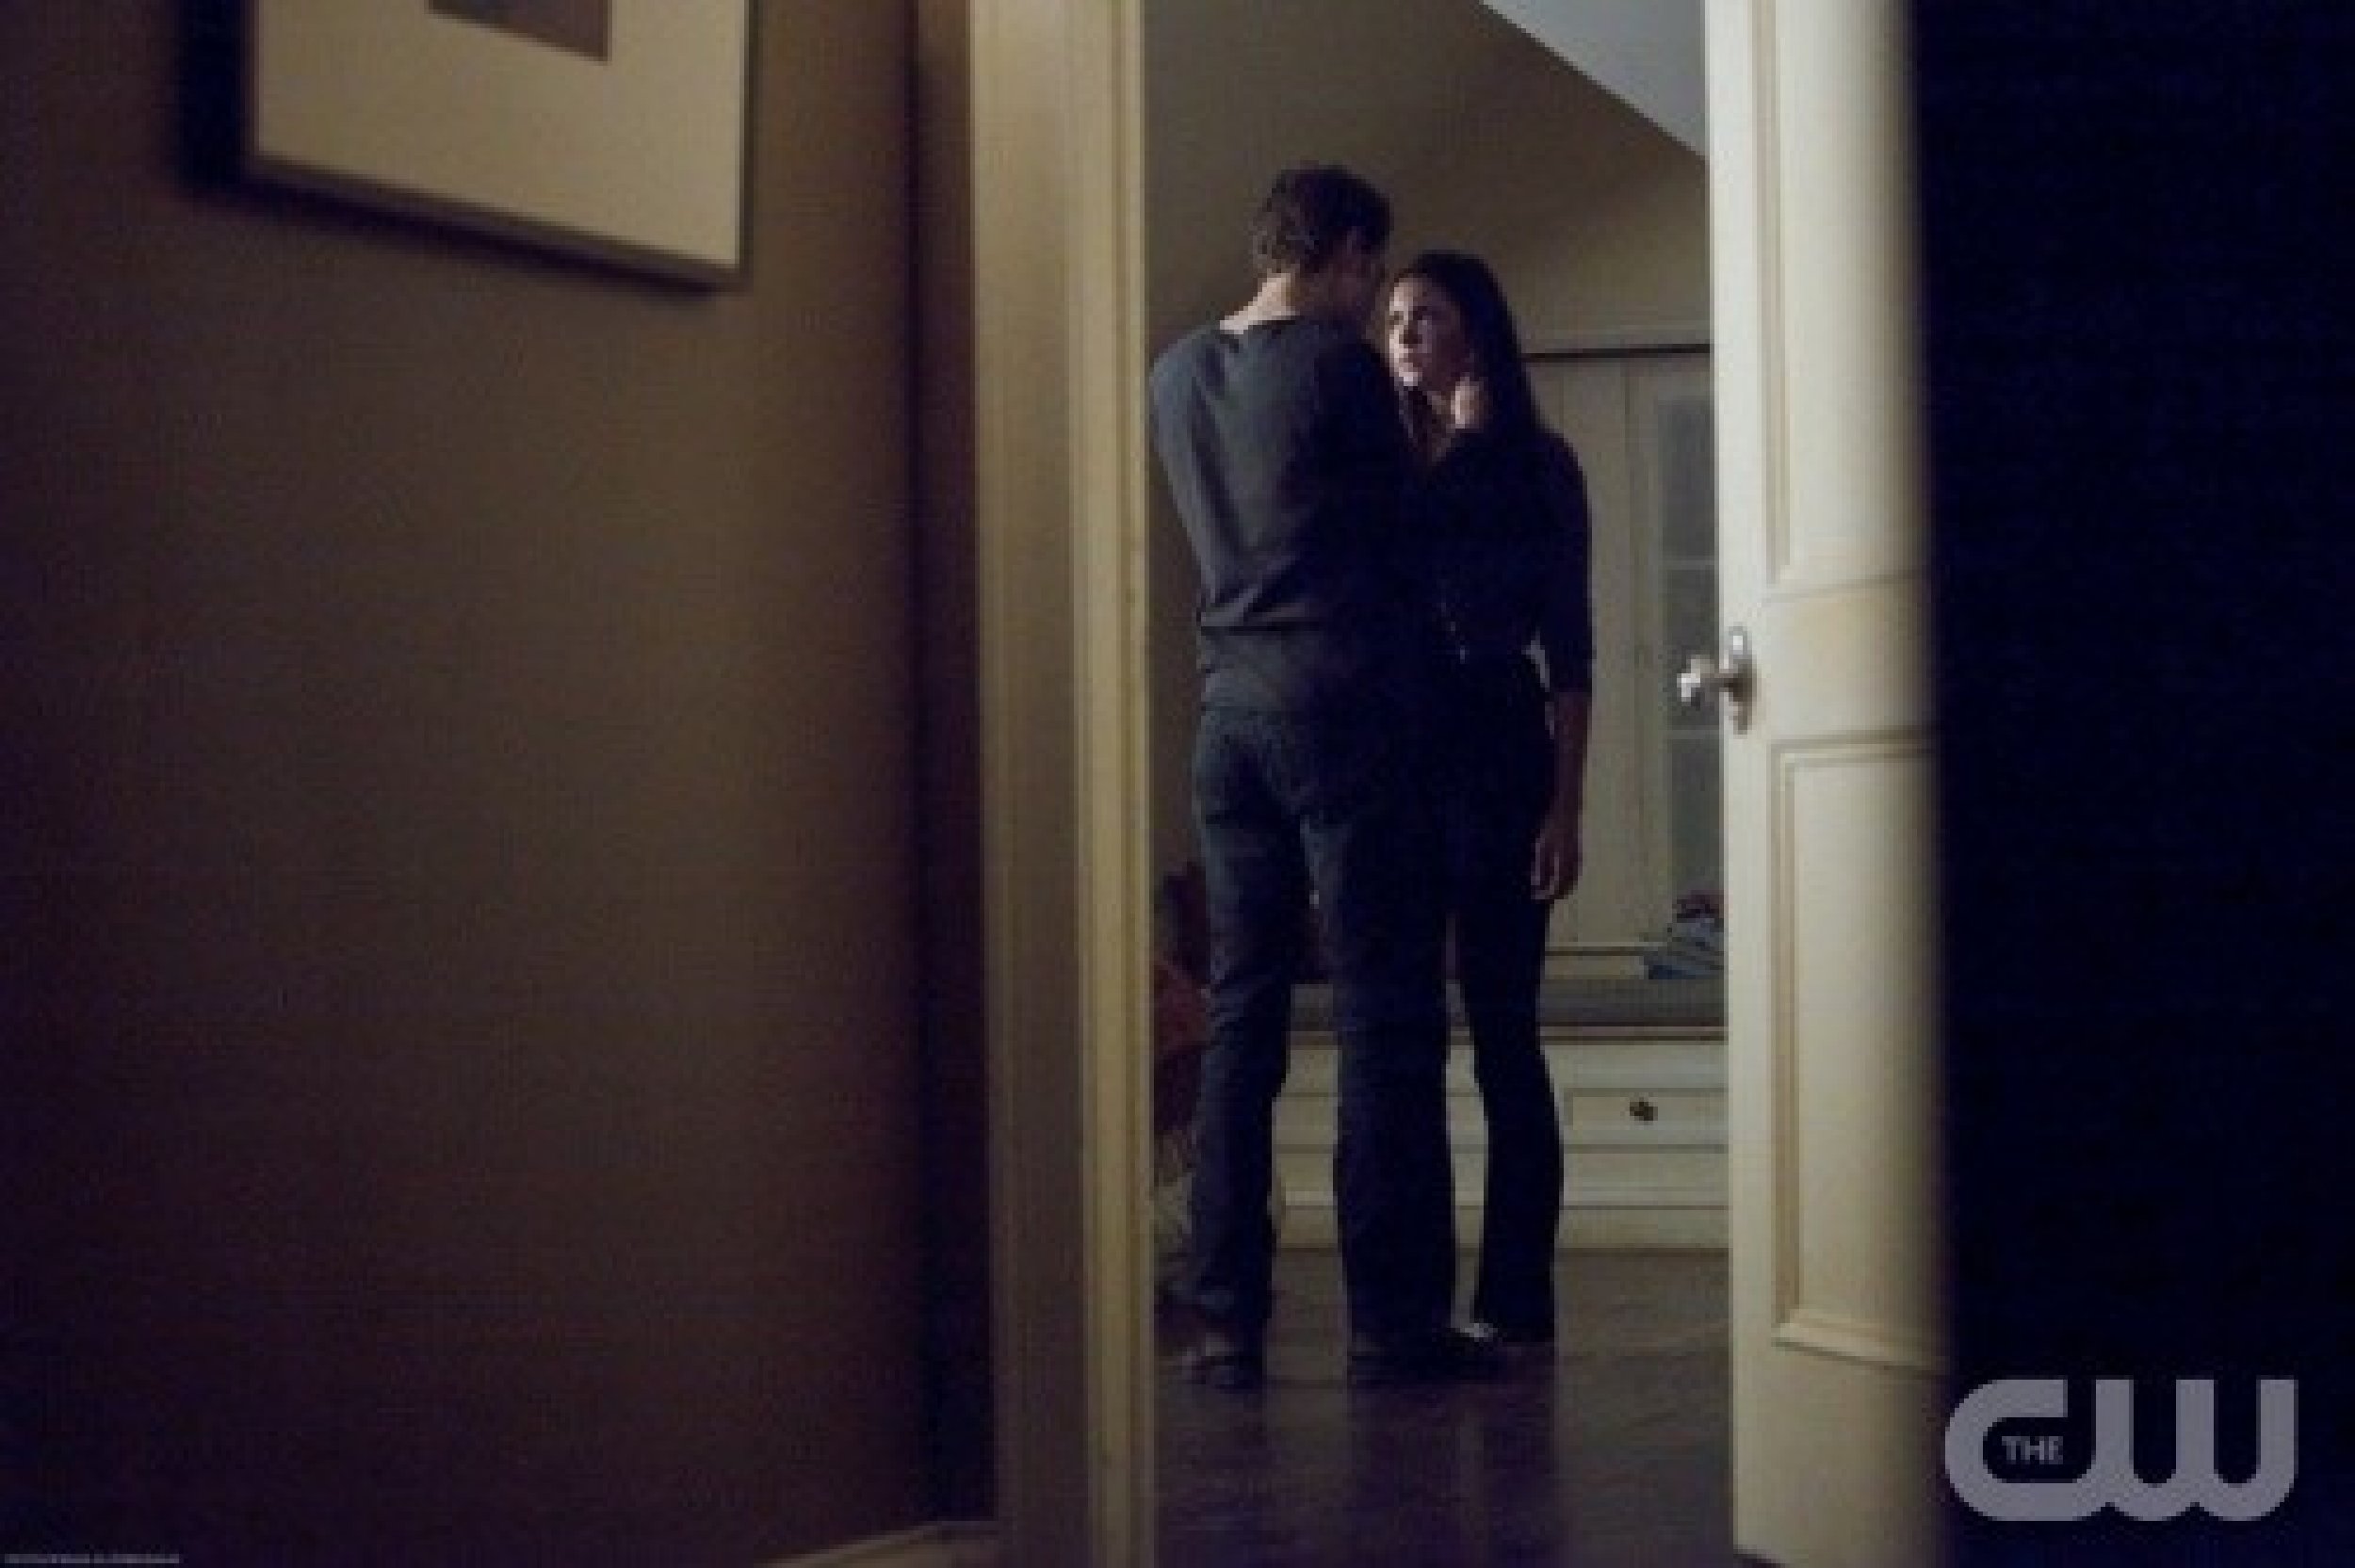 Elena and Stefan